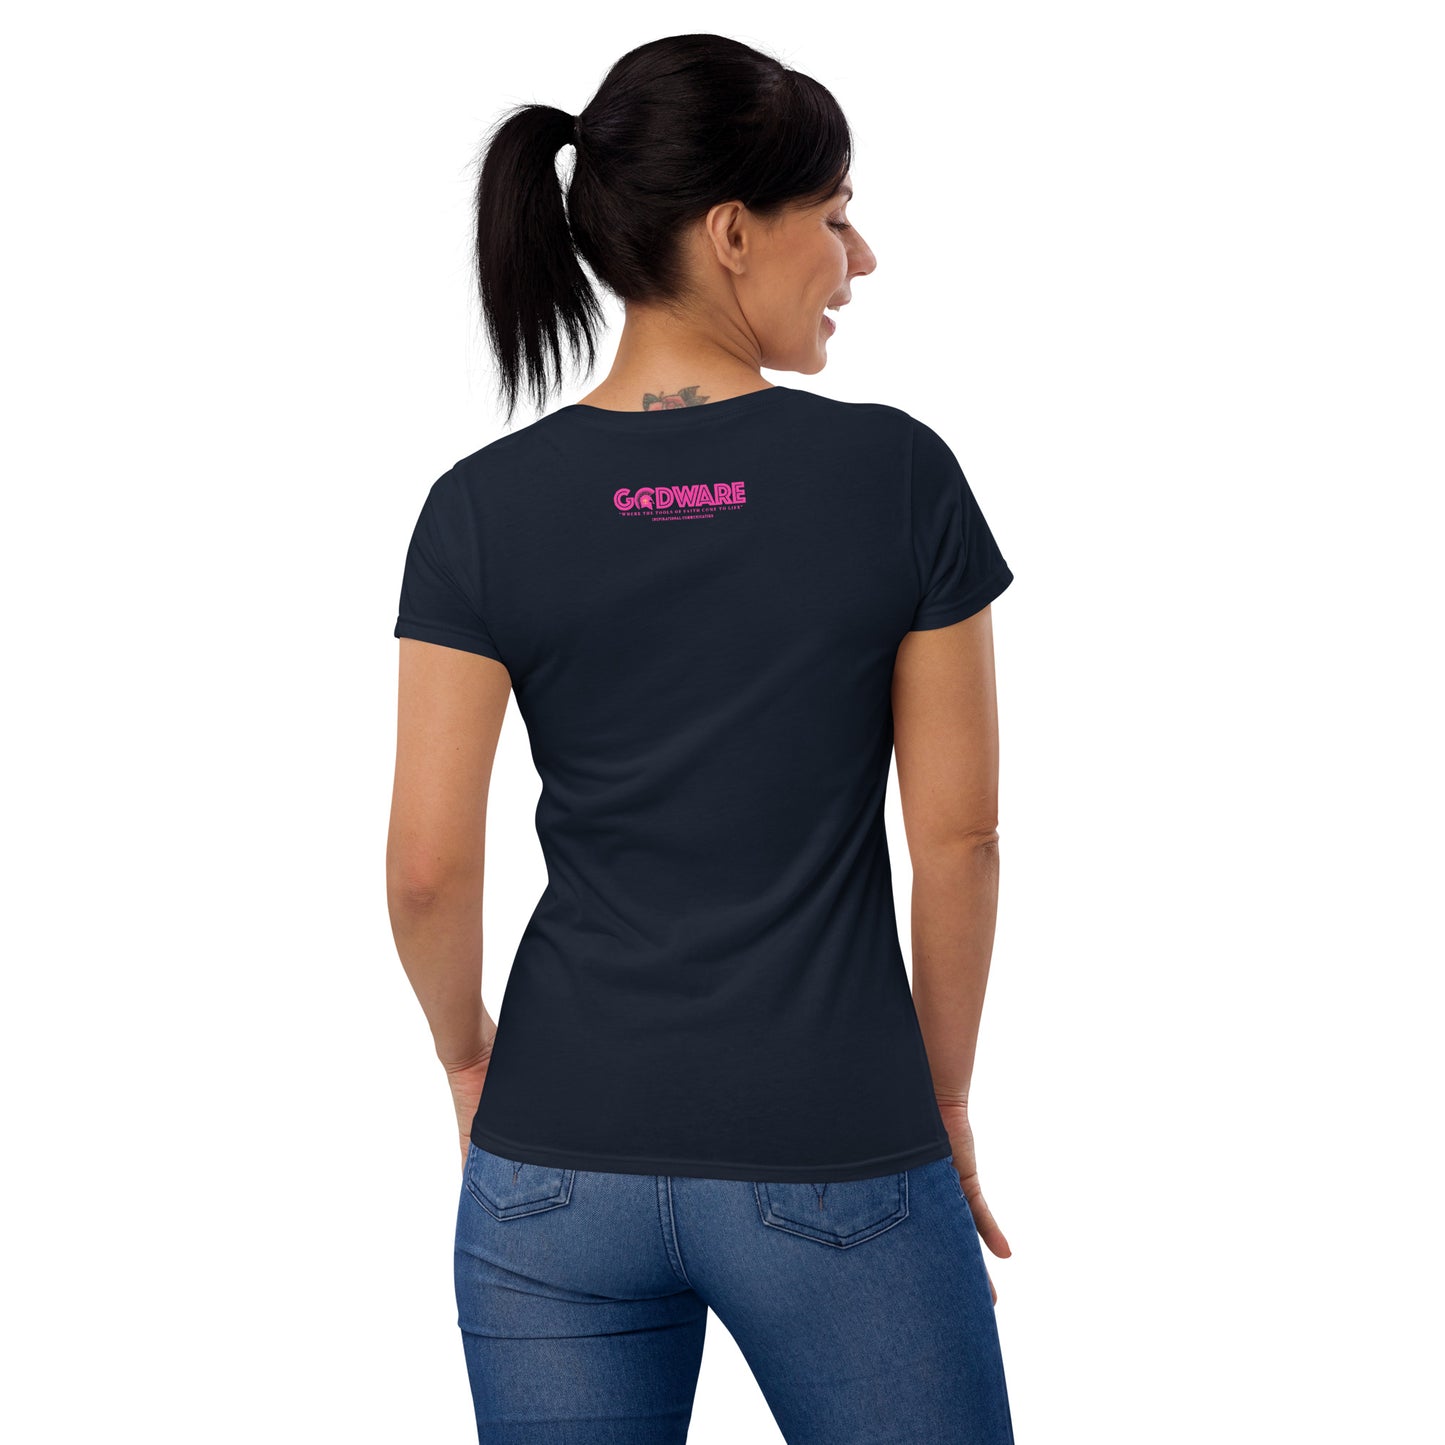 Attributes of God Women's short sleeve t-shirt - Pink print